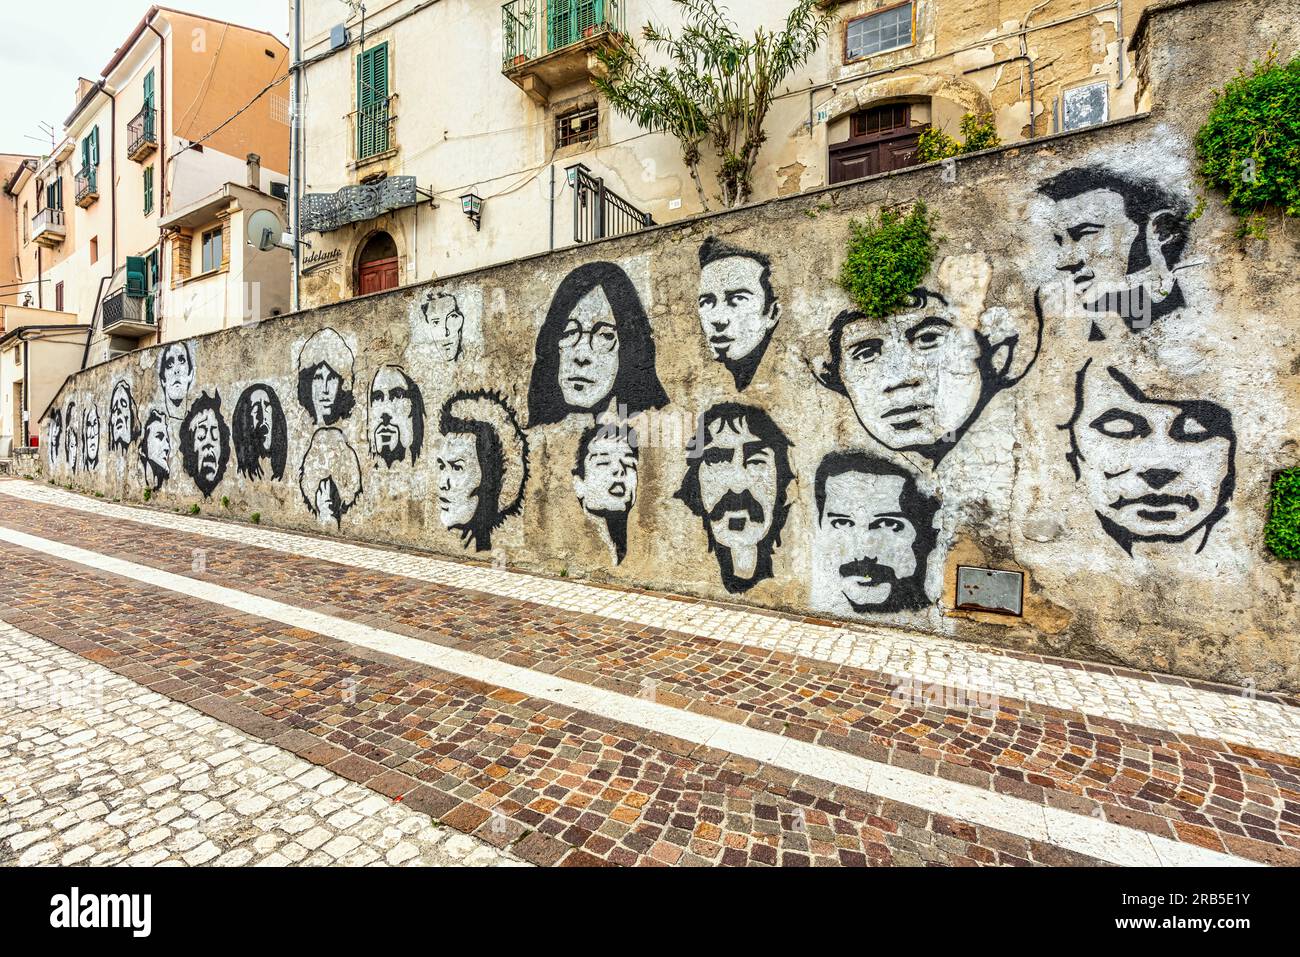 Murals of famous people, dead rock stars, in the historic center of the town of Tocco da Casauria. Tocco da Casauria, Pescara province, Abruzzo, Italy Stock Photo